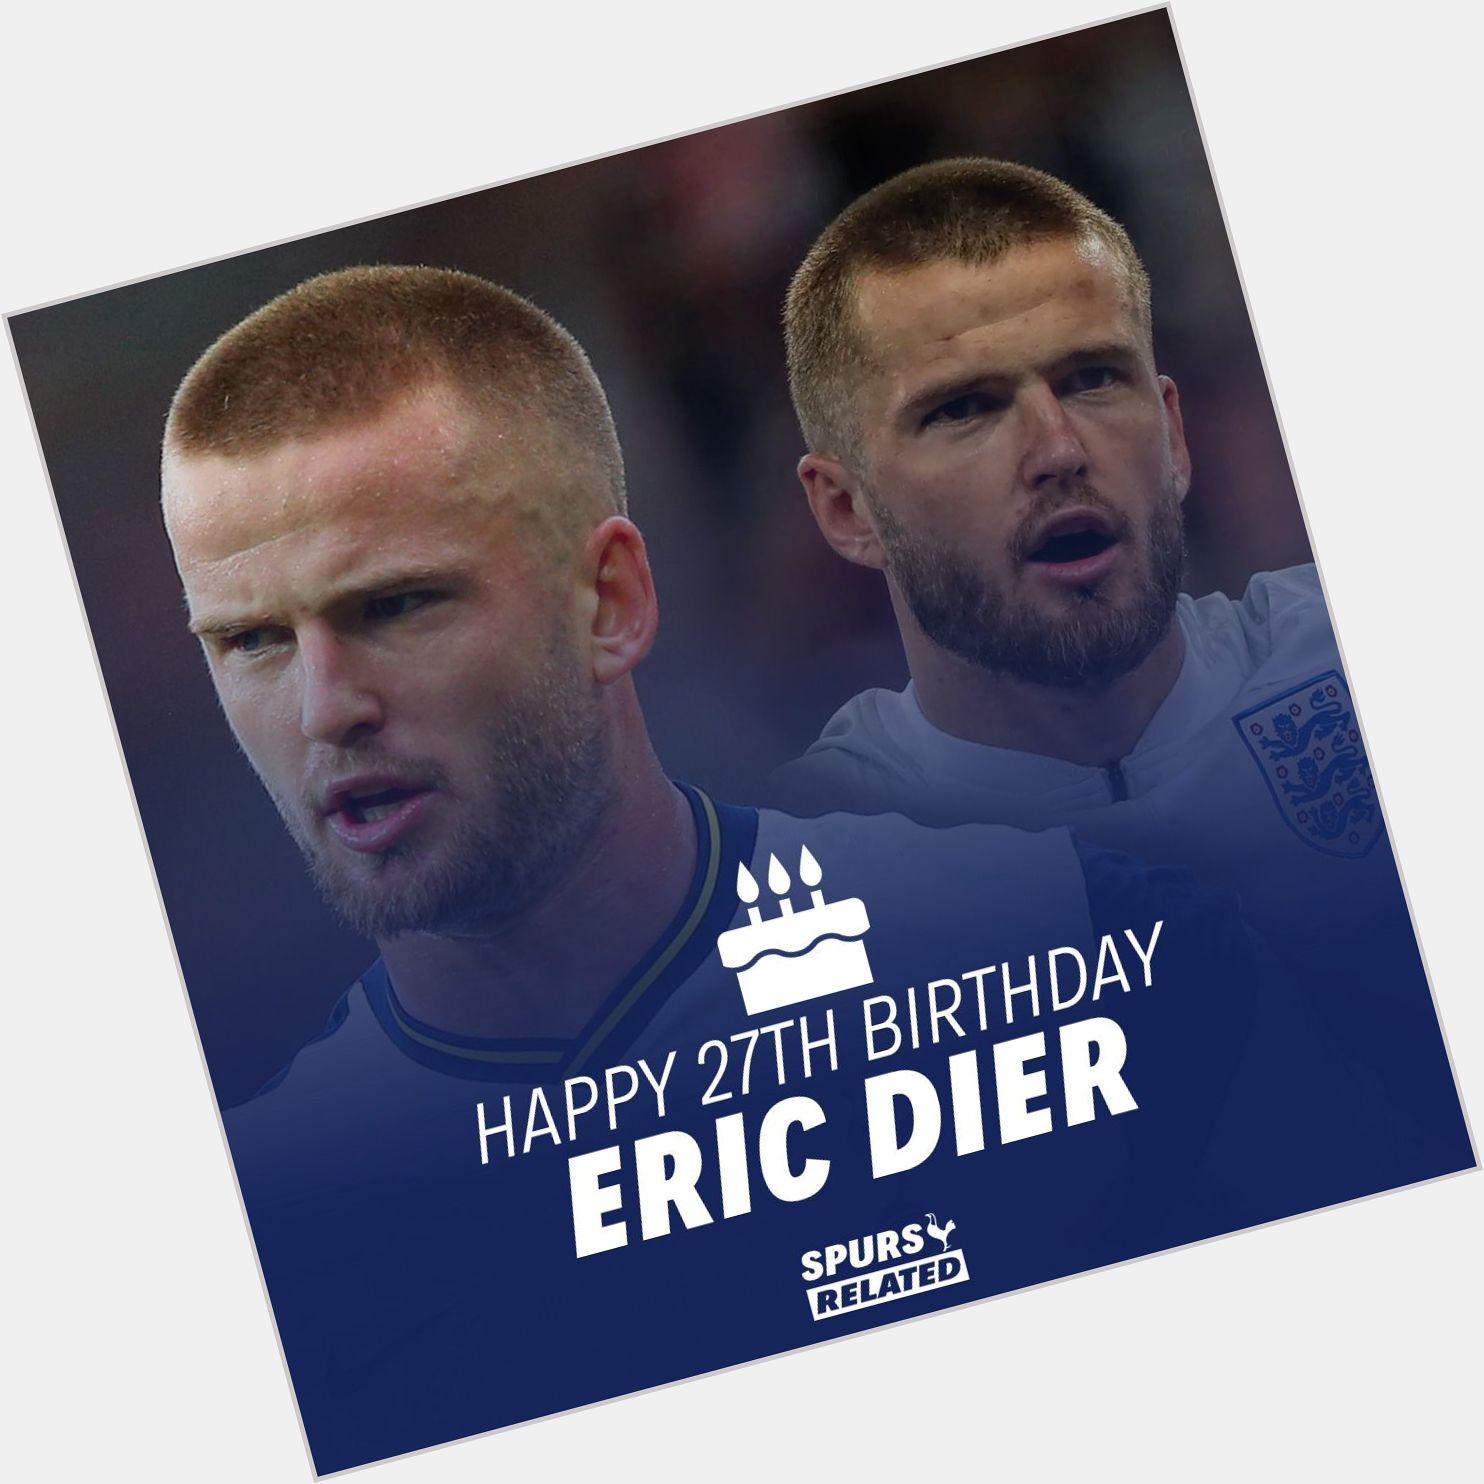 Happy 27th birthday Eric Dier !!           